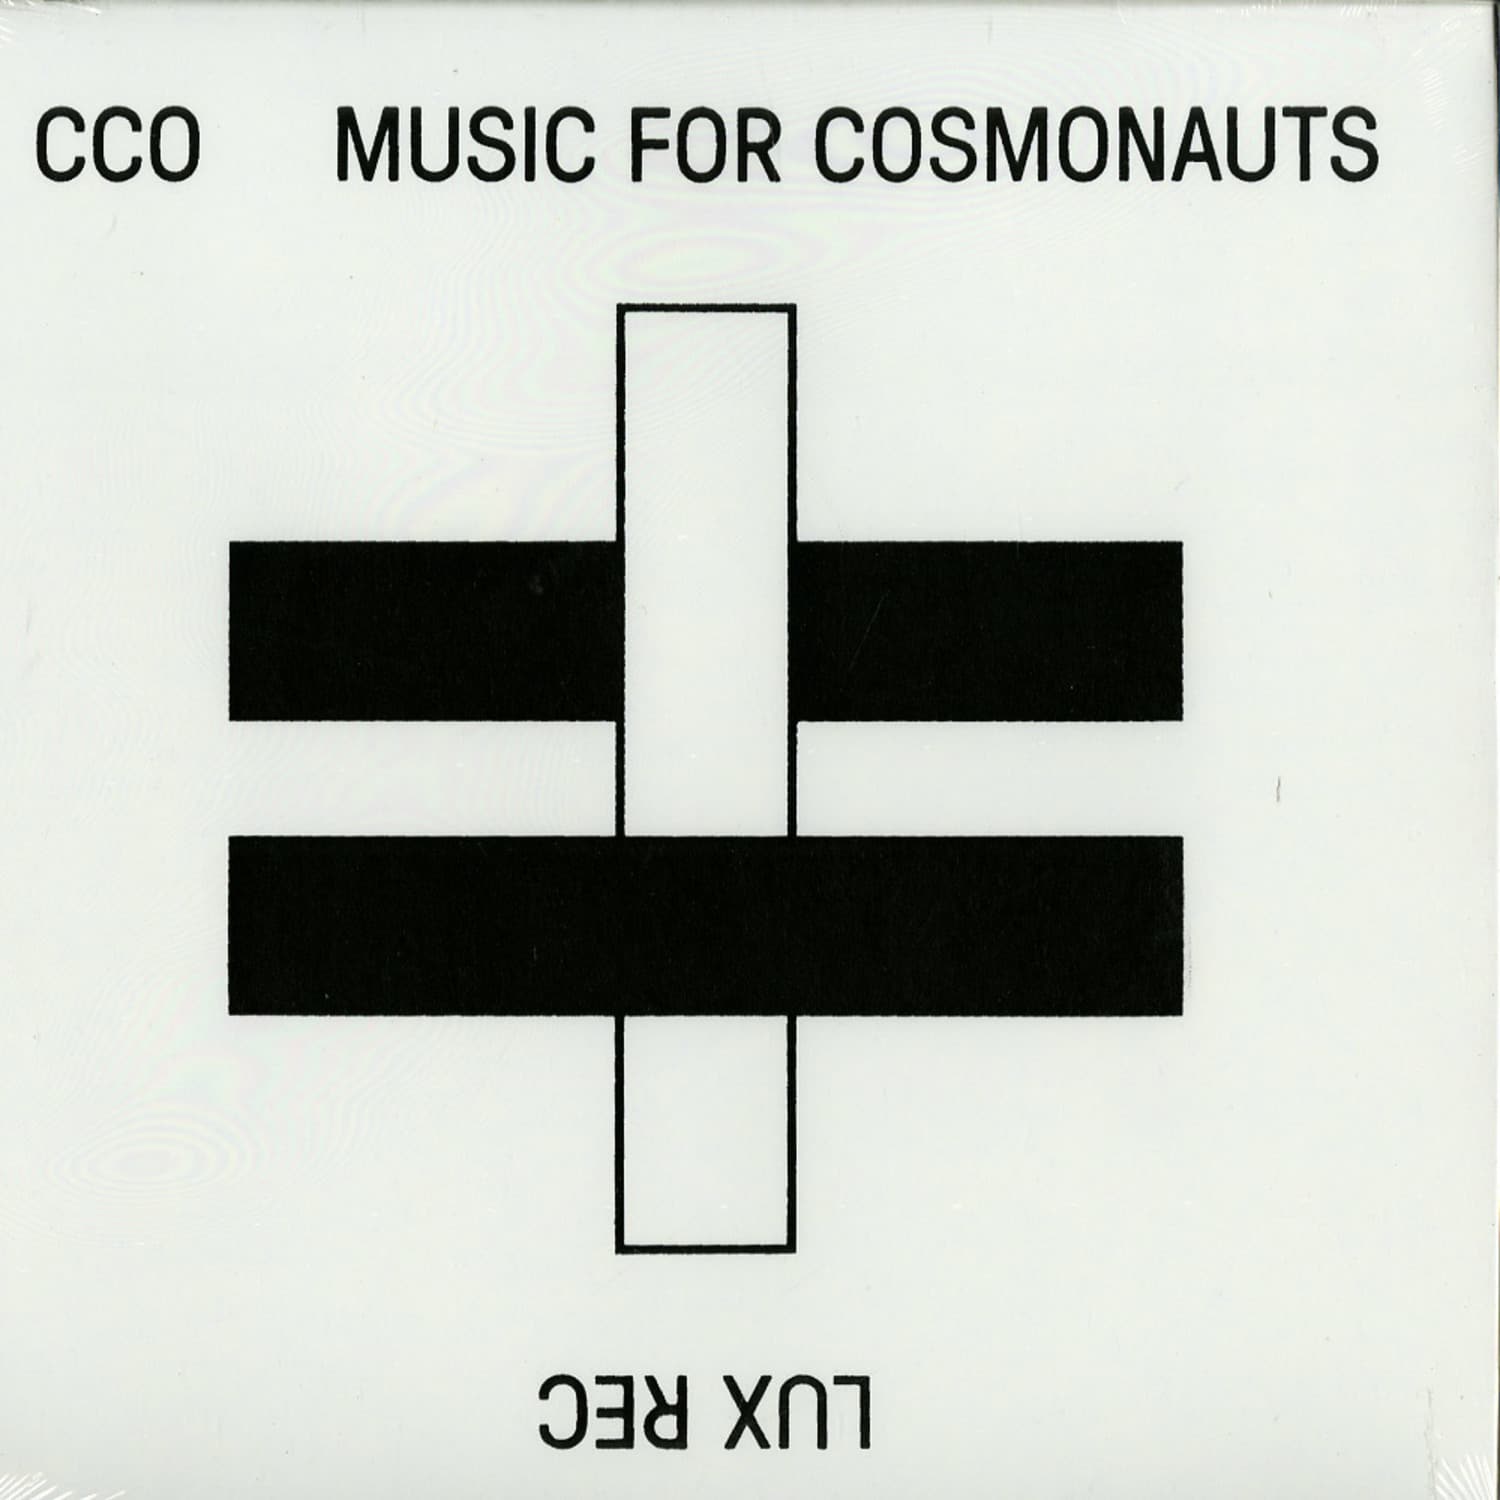 CCO - MUSIC FOR COSMONAUTS 